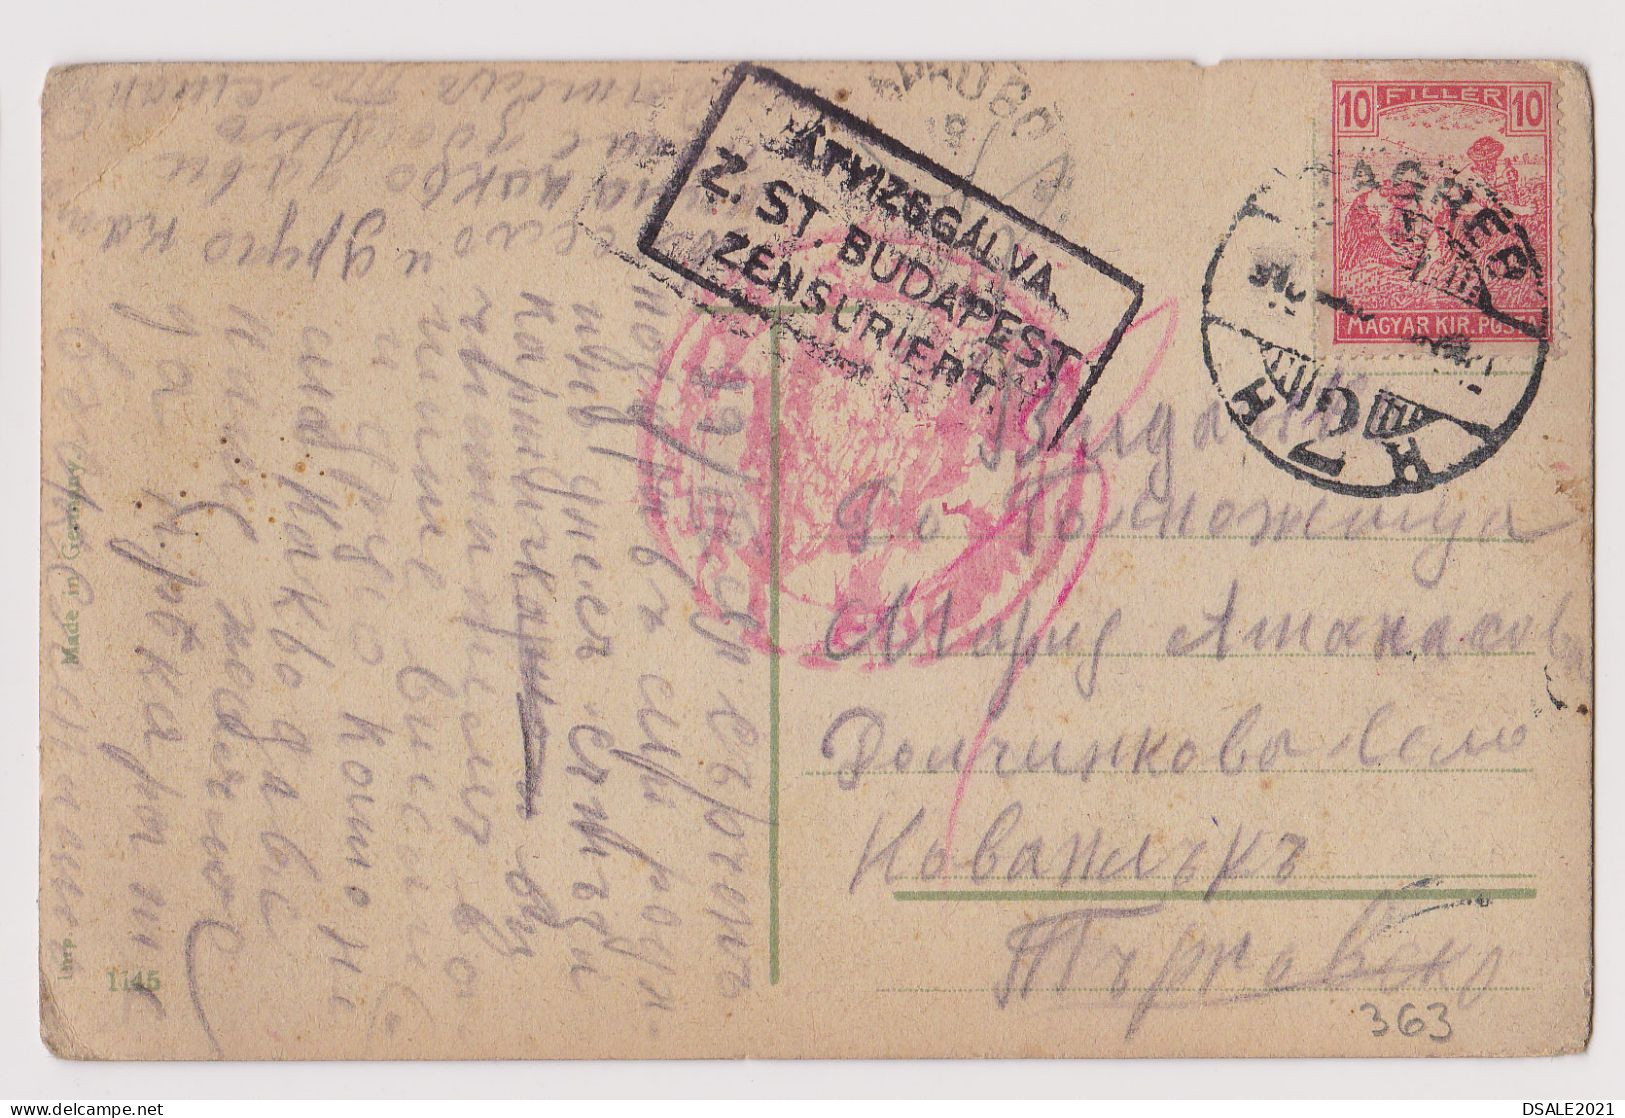 Hungary Croatia Ww1 Postcard Sent ZAGREB Censored BUDAPEST To Bulgaria Sofia Civil Censored Cachet (363) - Briefe U. Dokumente